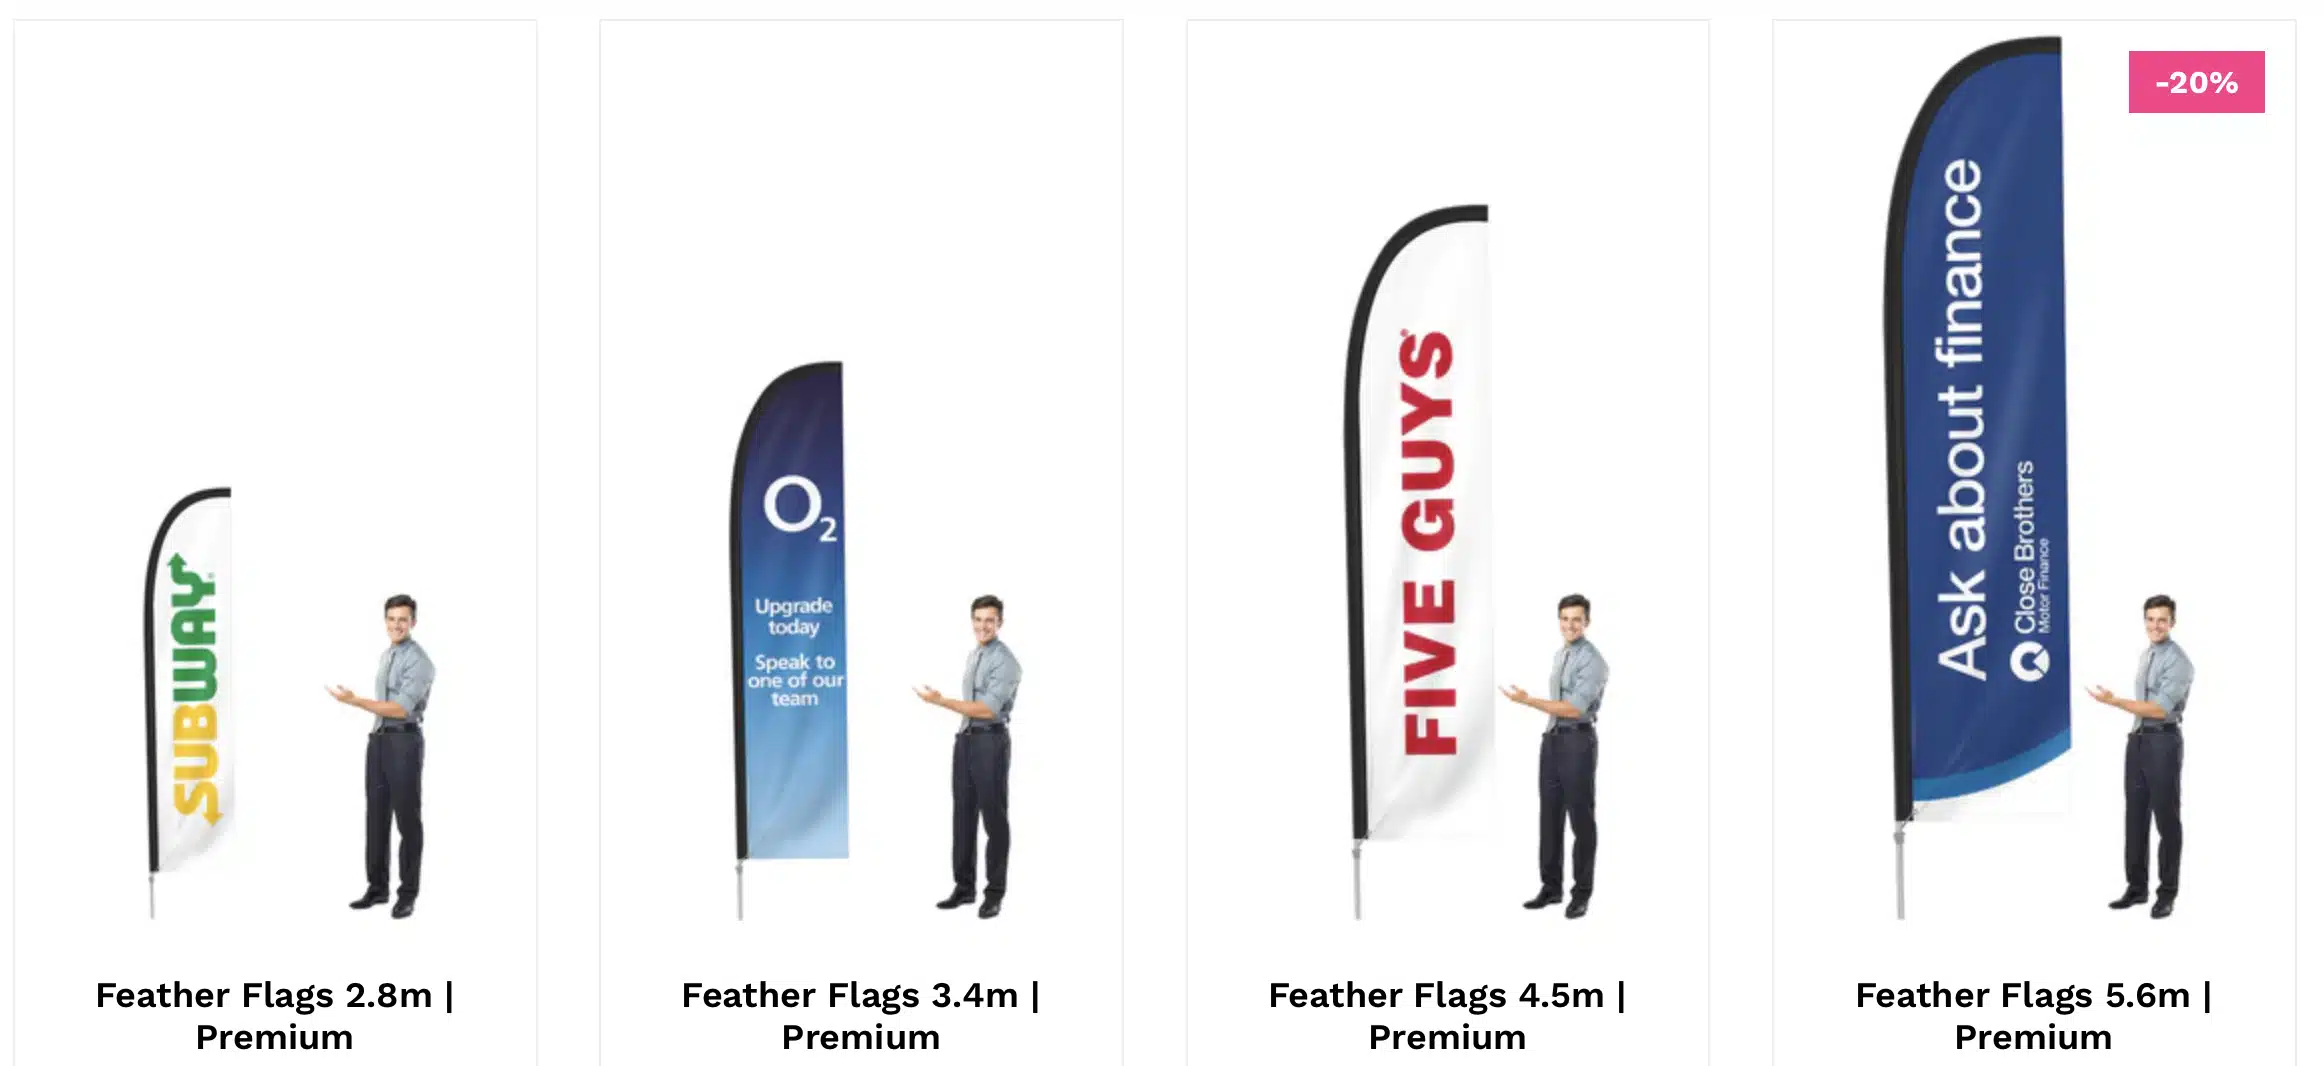 Feather flag sizes